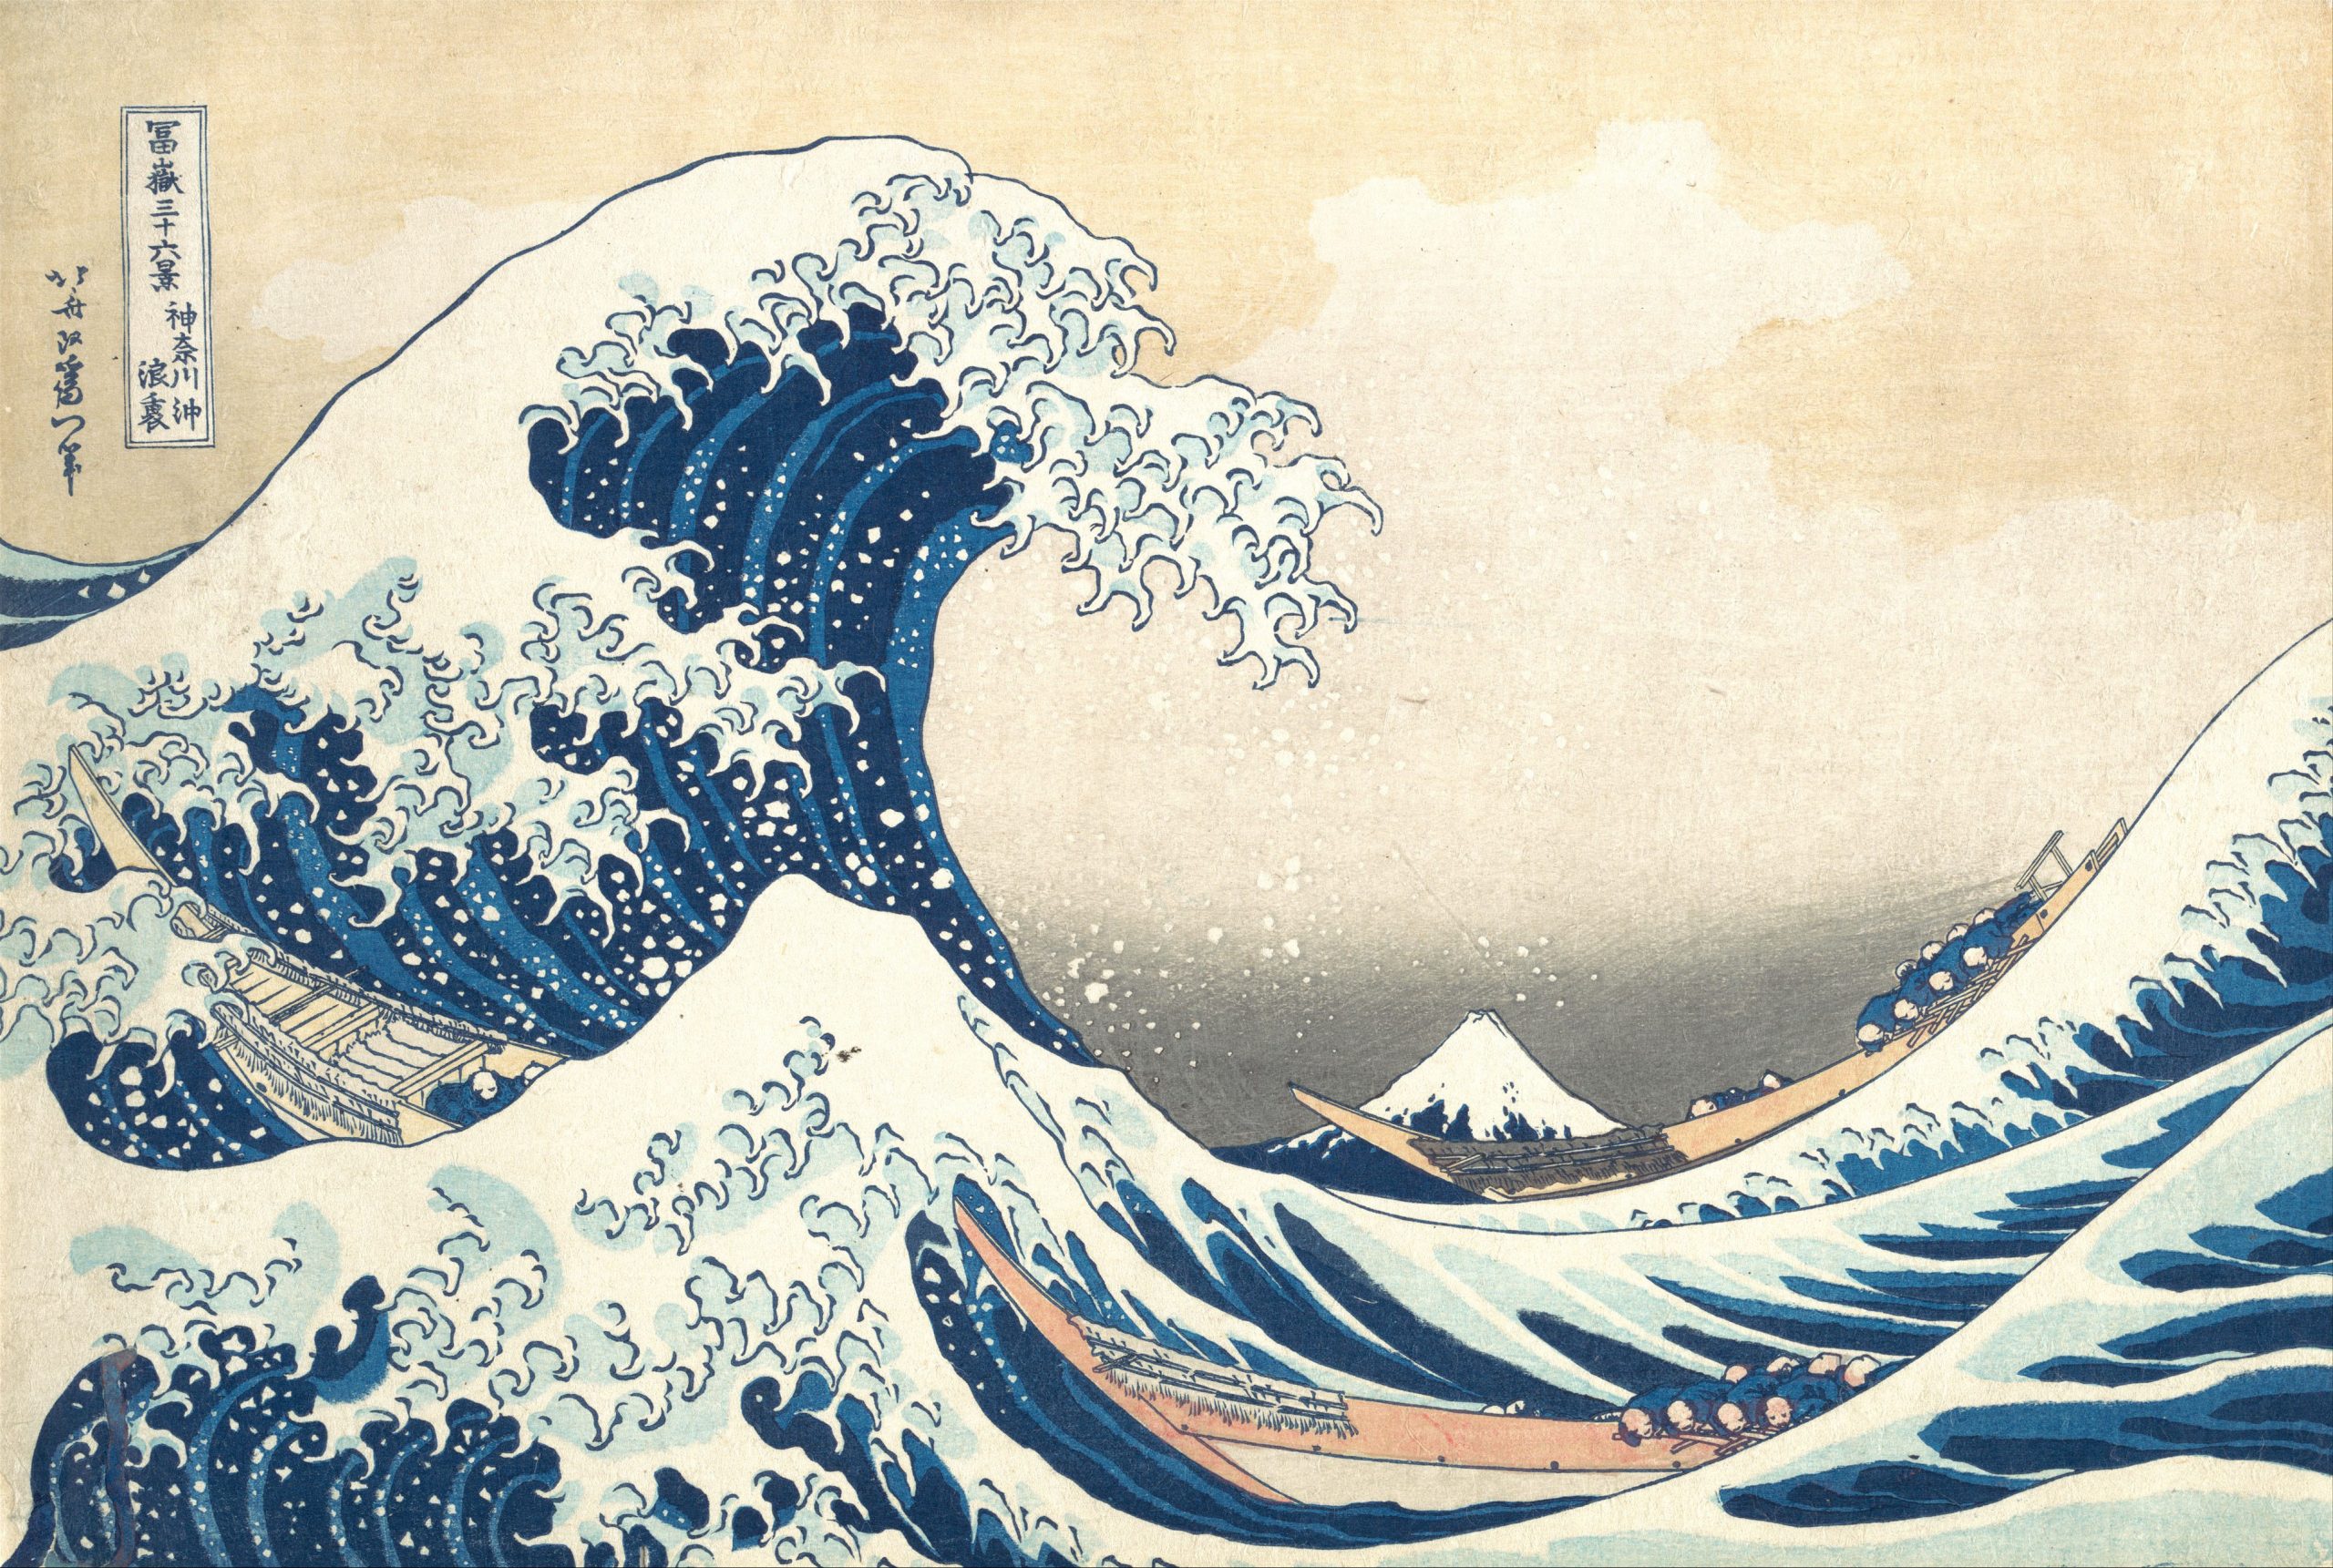 Great Wave off Kanagawa - Hokusai – Crafty By Numbers